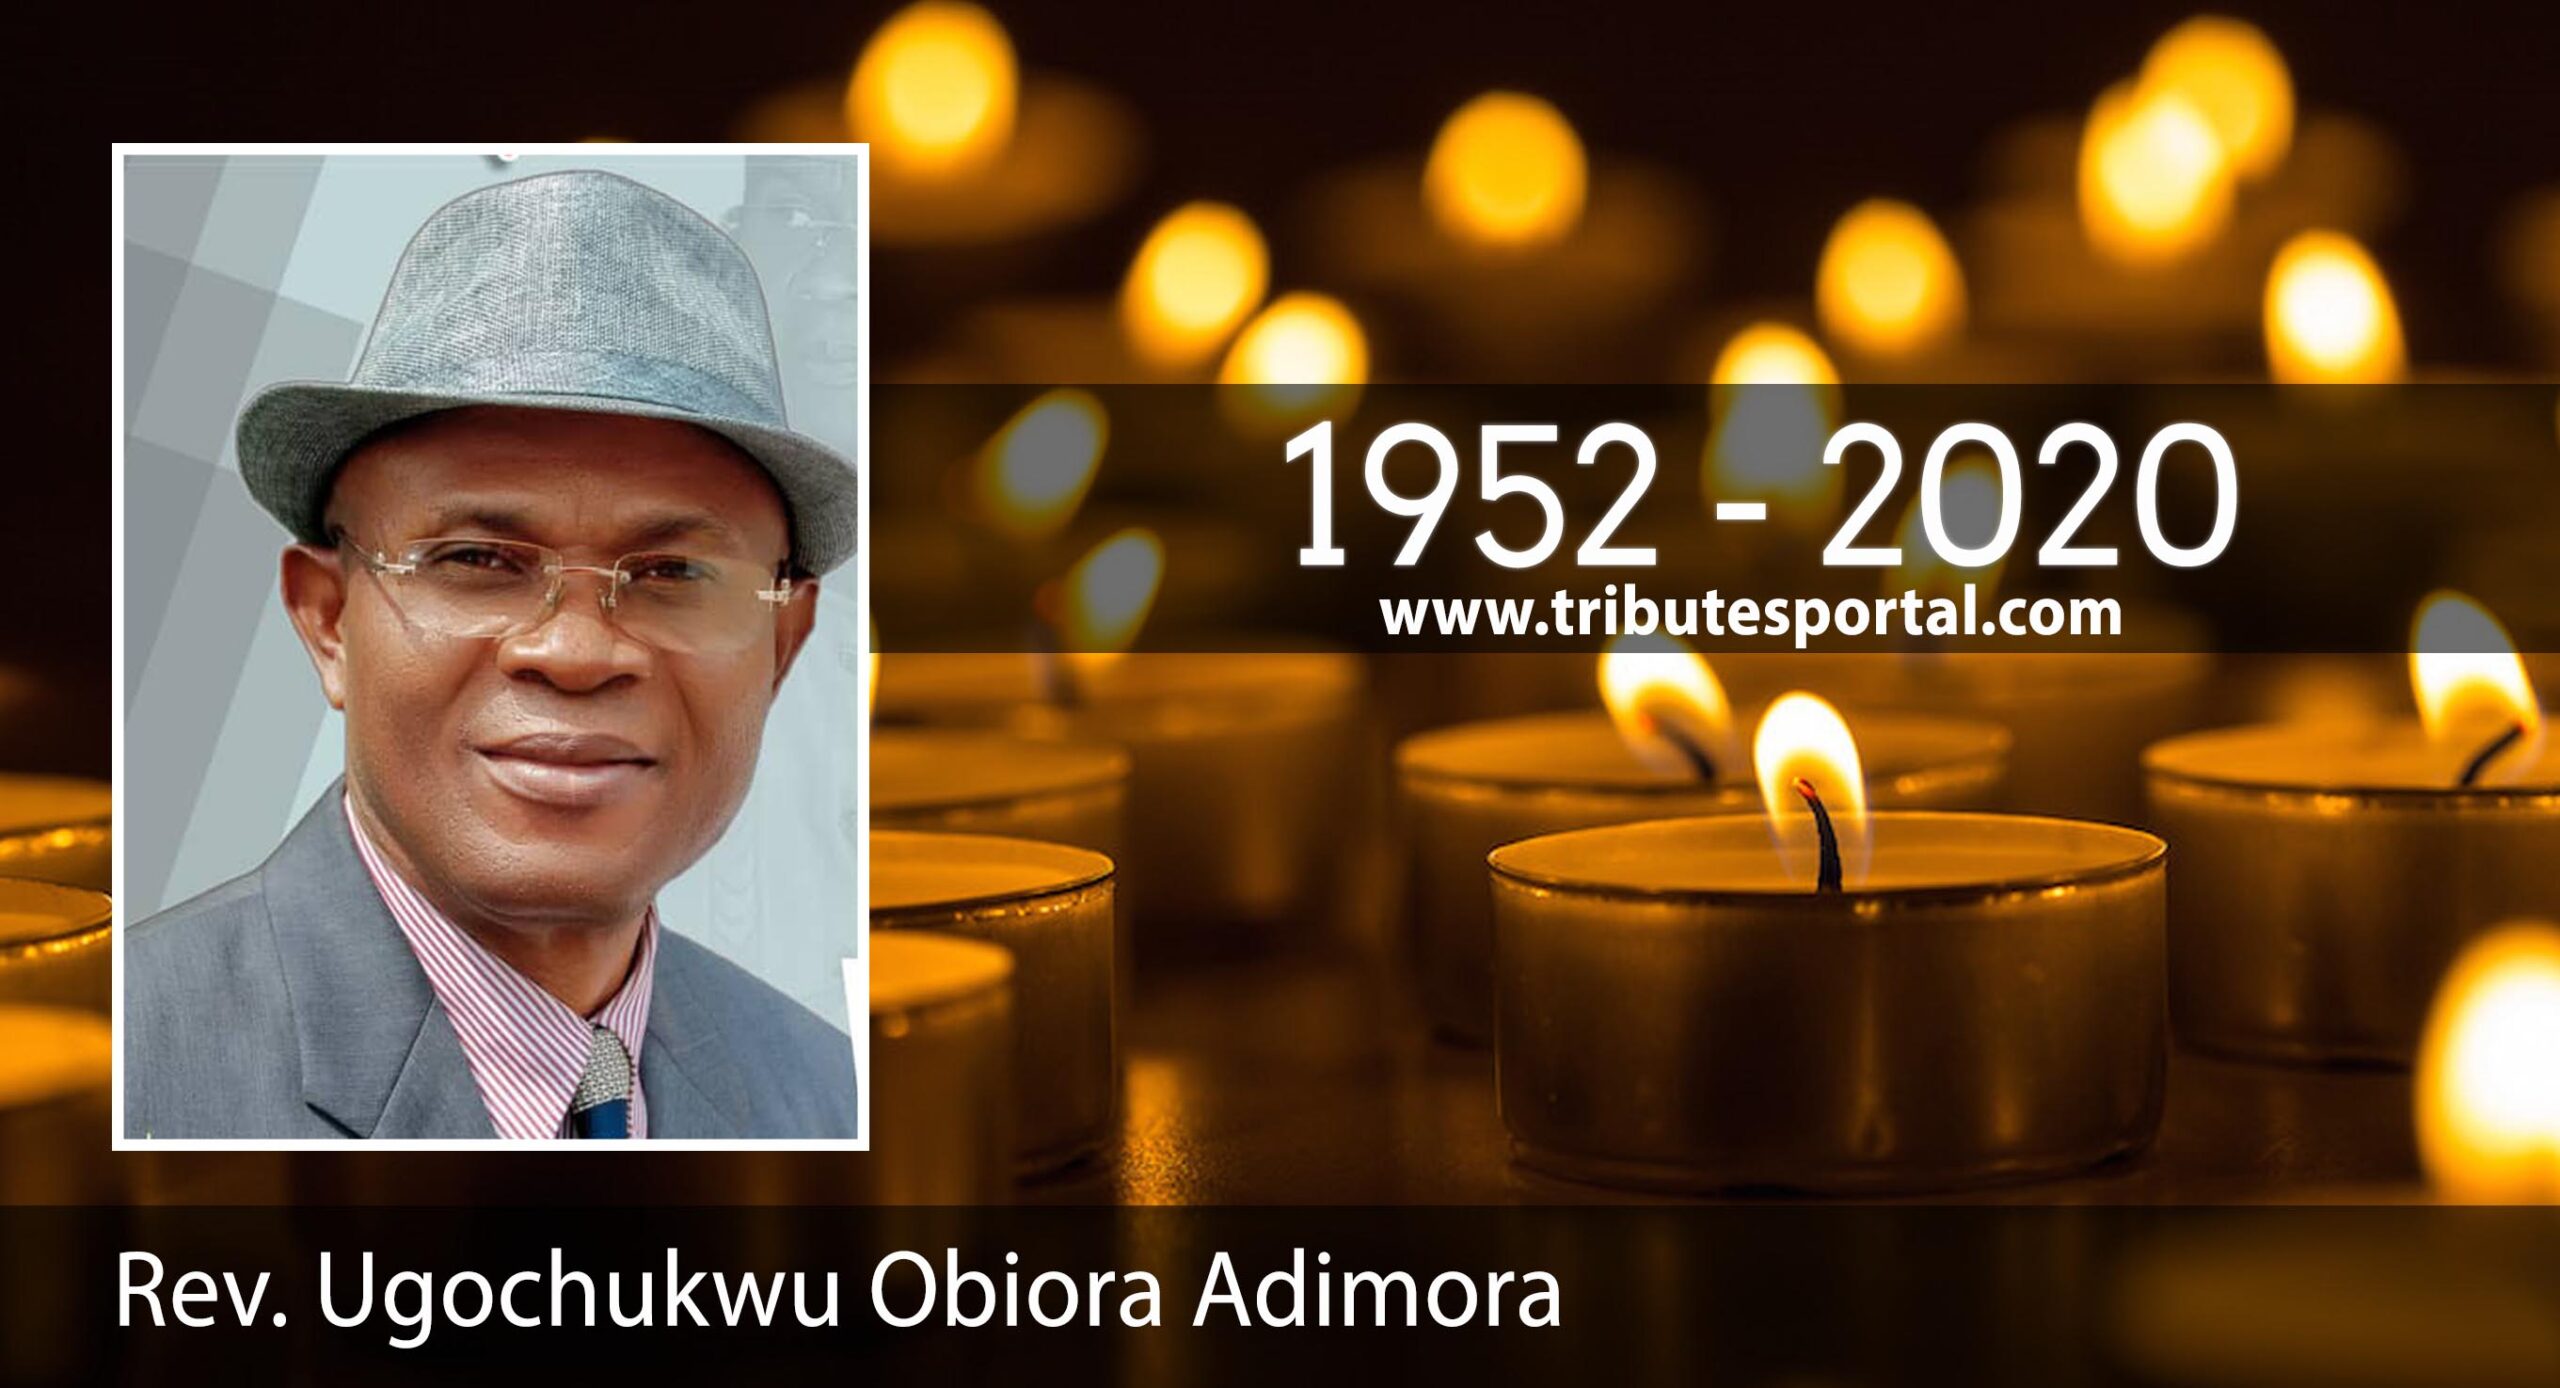 Tributes Portal: Family Members open Online Memorial Page for Rev. Ugochukwu Obiora Adimora